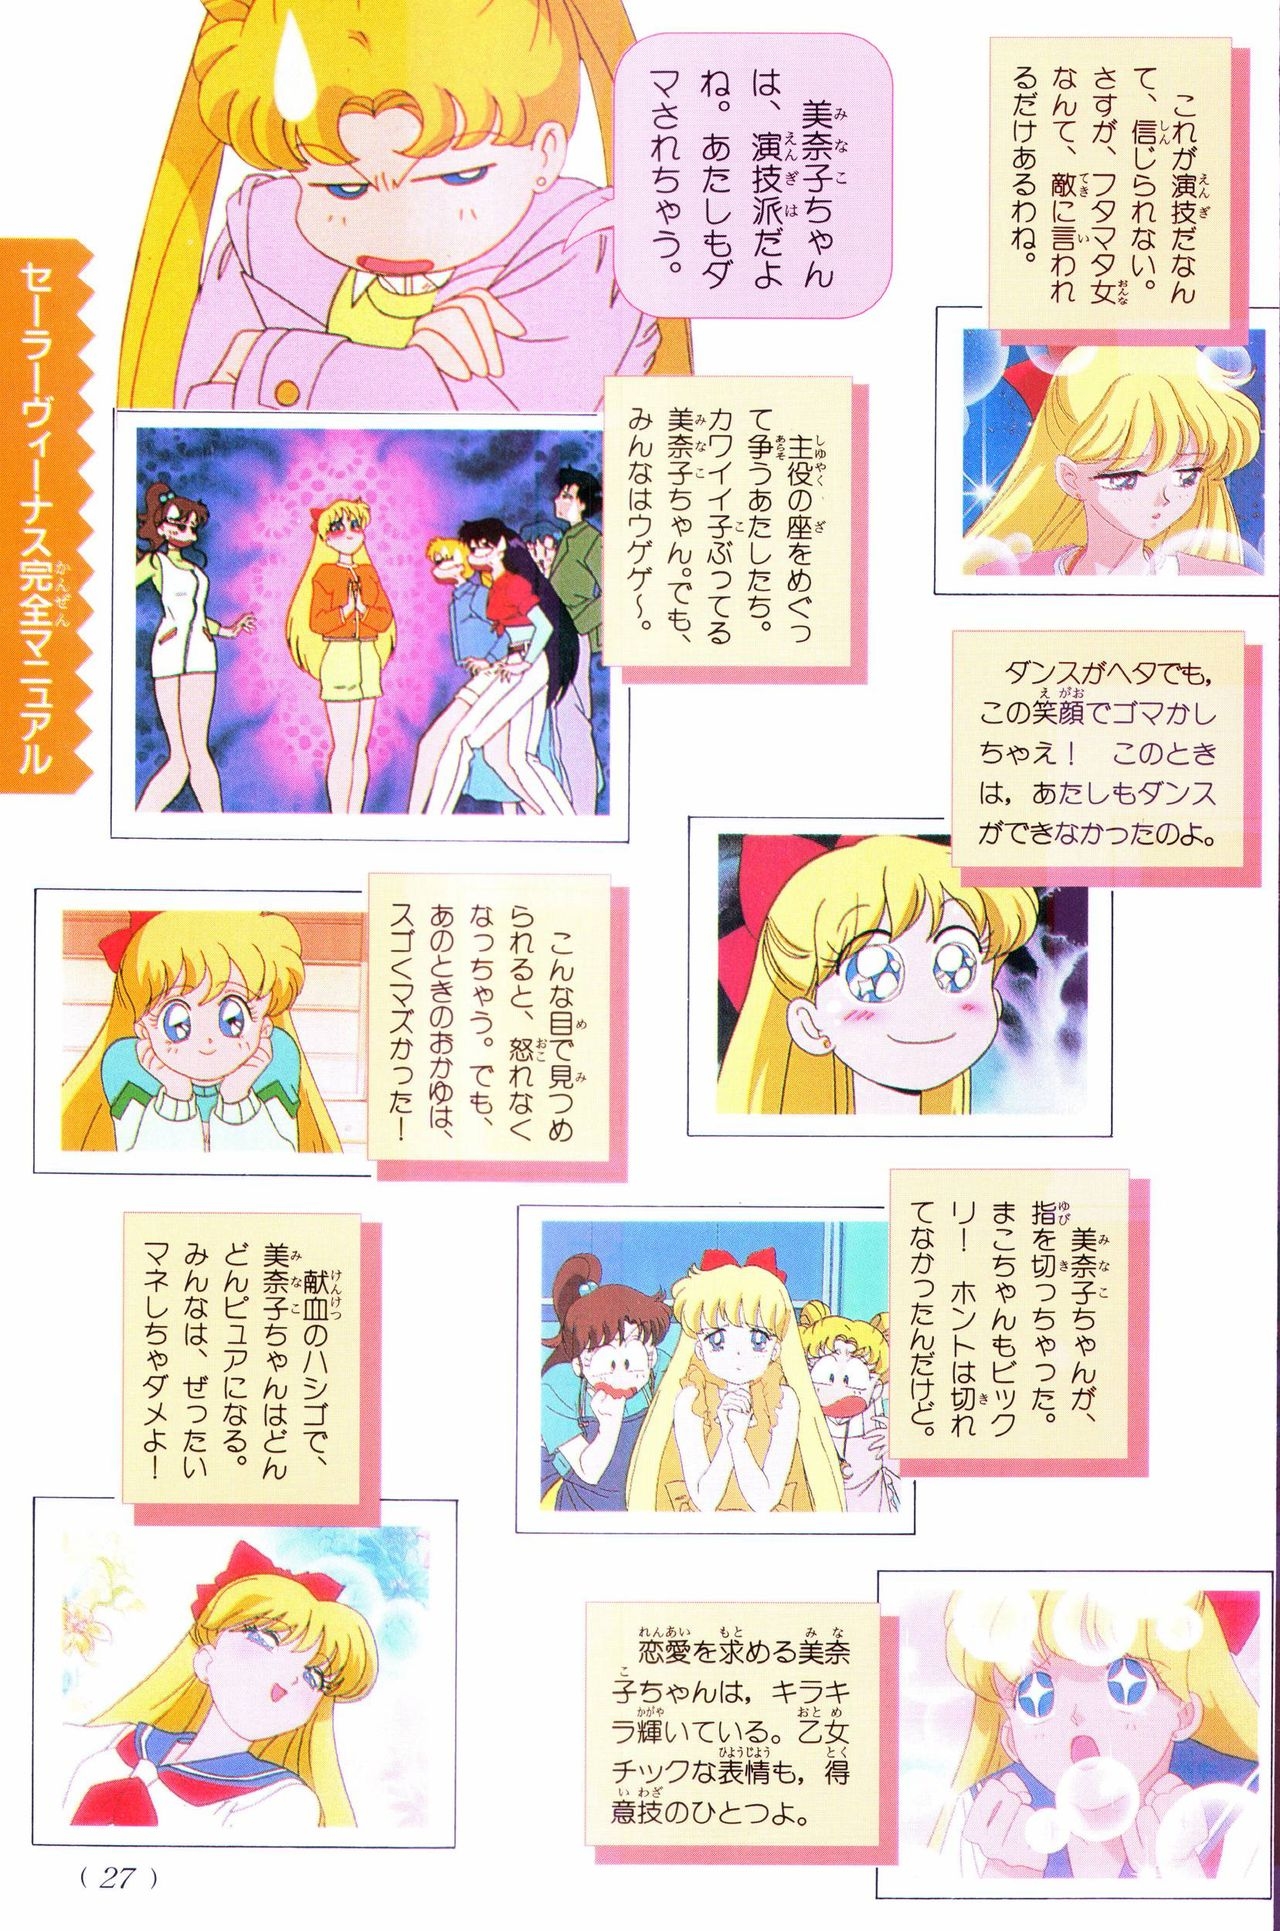 Sailor Moon Official Fan Book - Sailor Venus 67